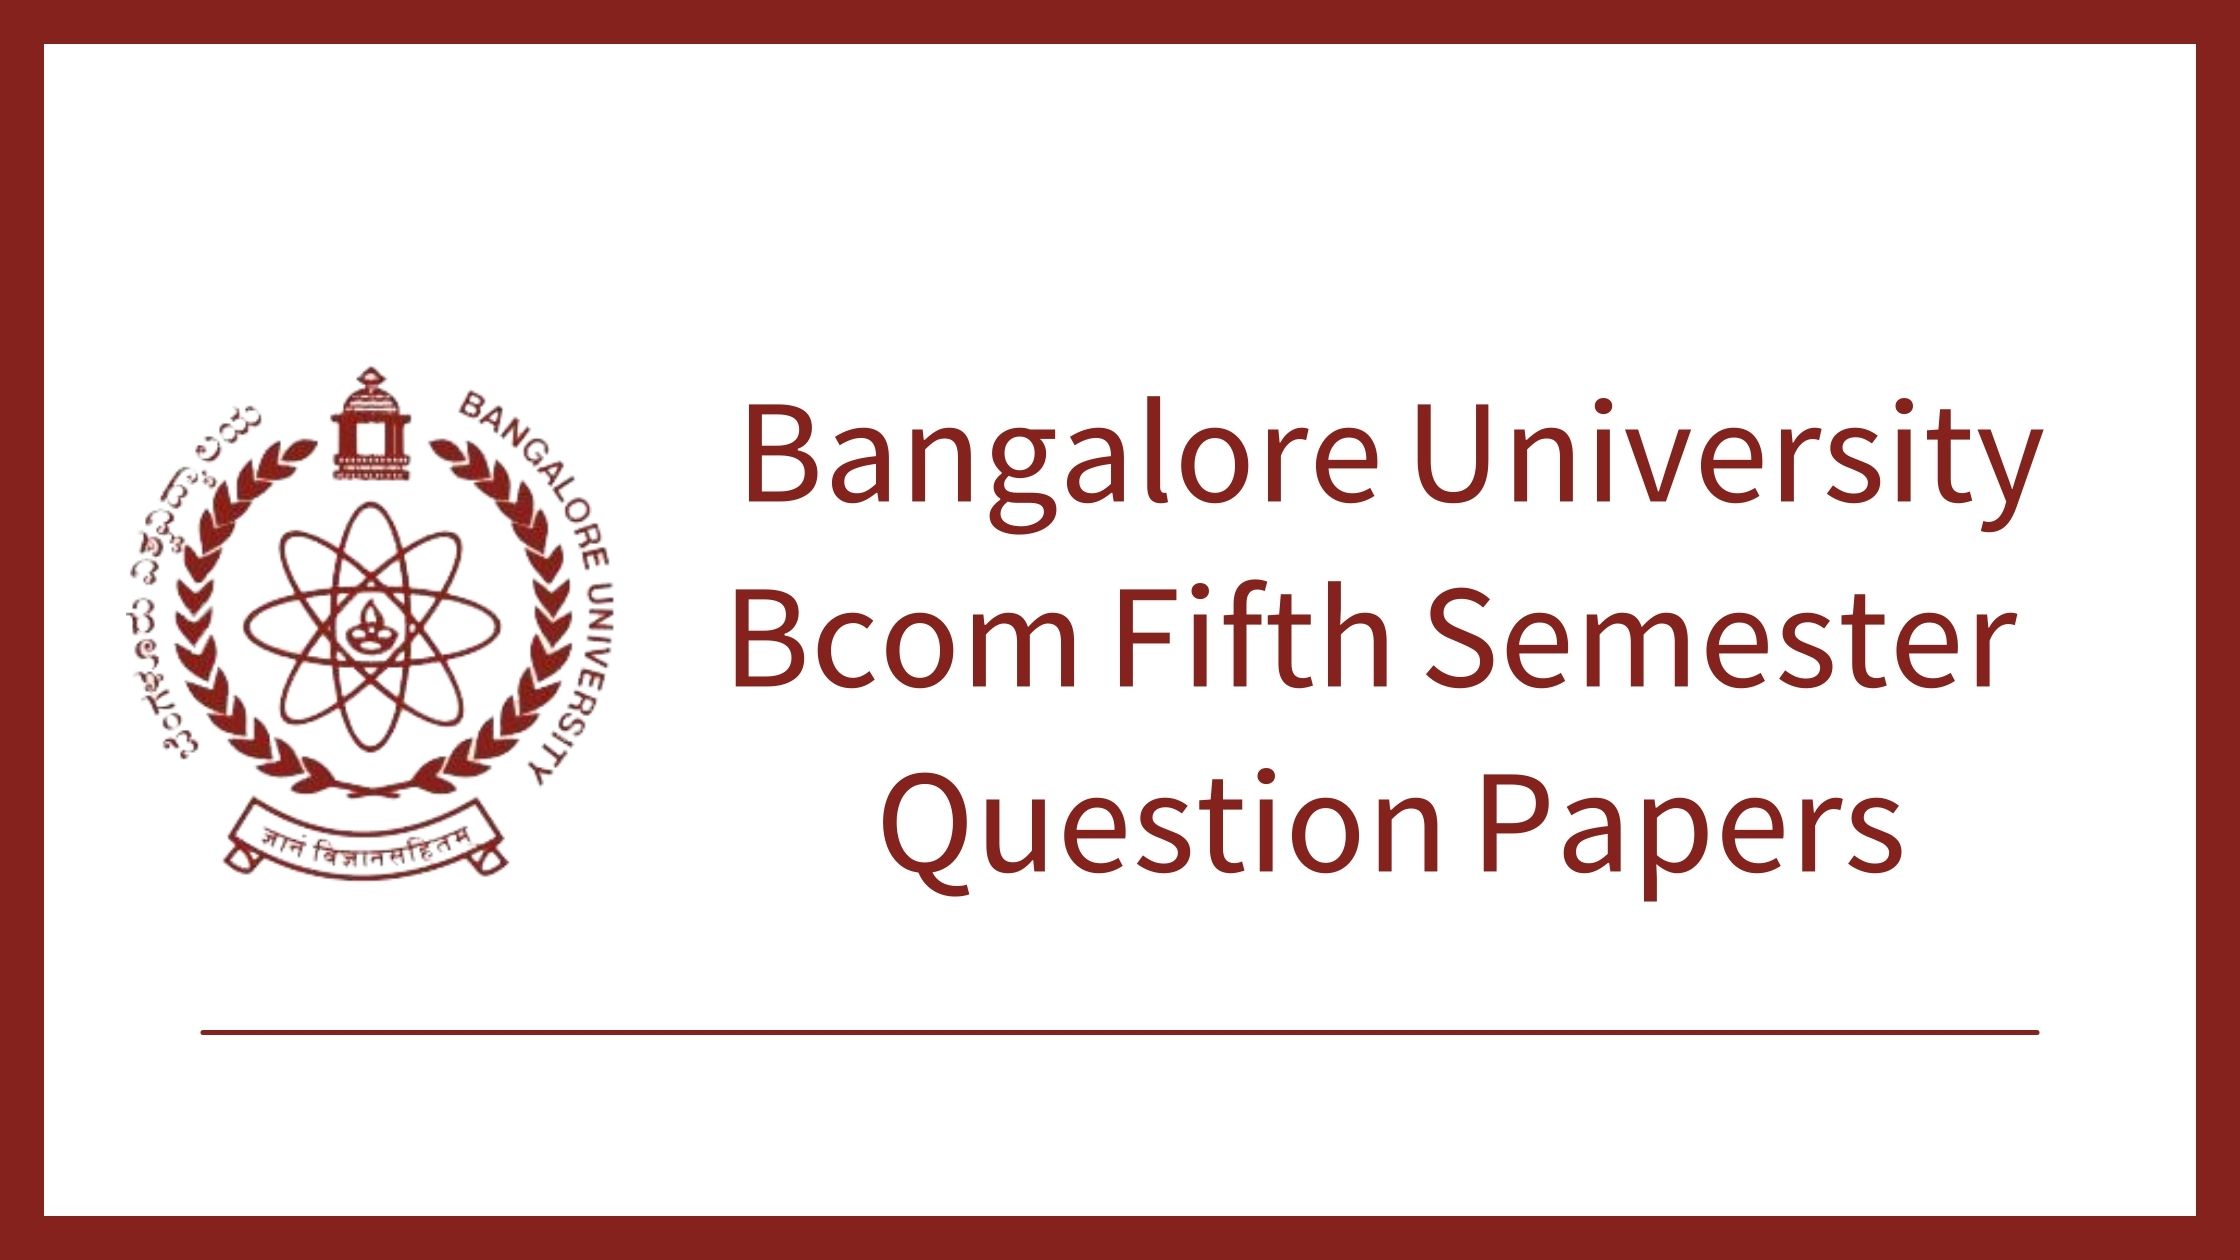 Bangalore University BCom Fifth Semester previous question paper